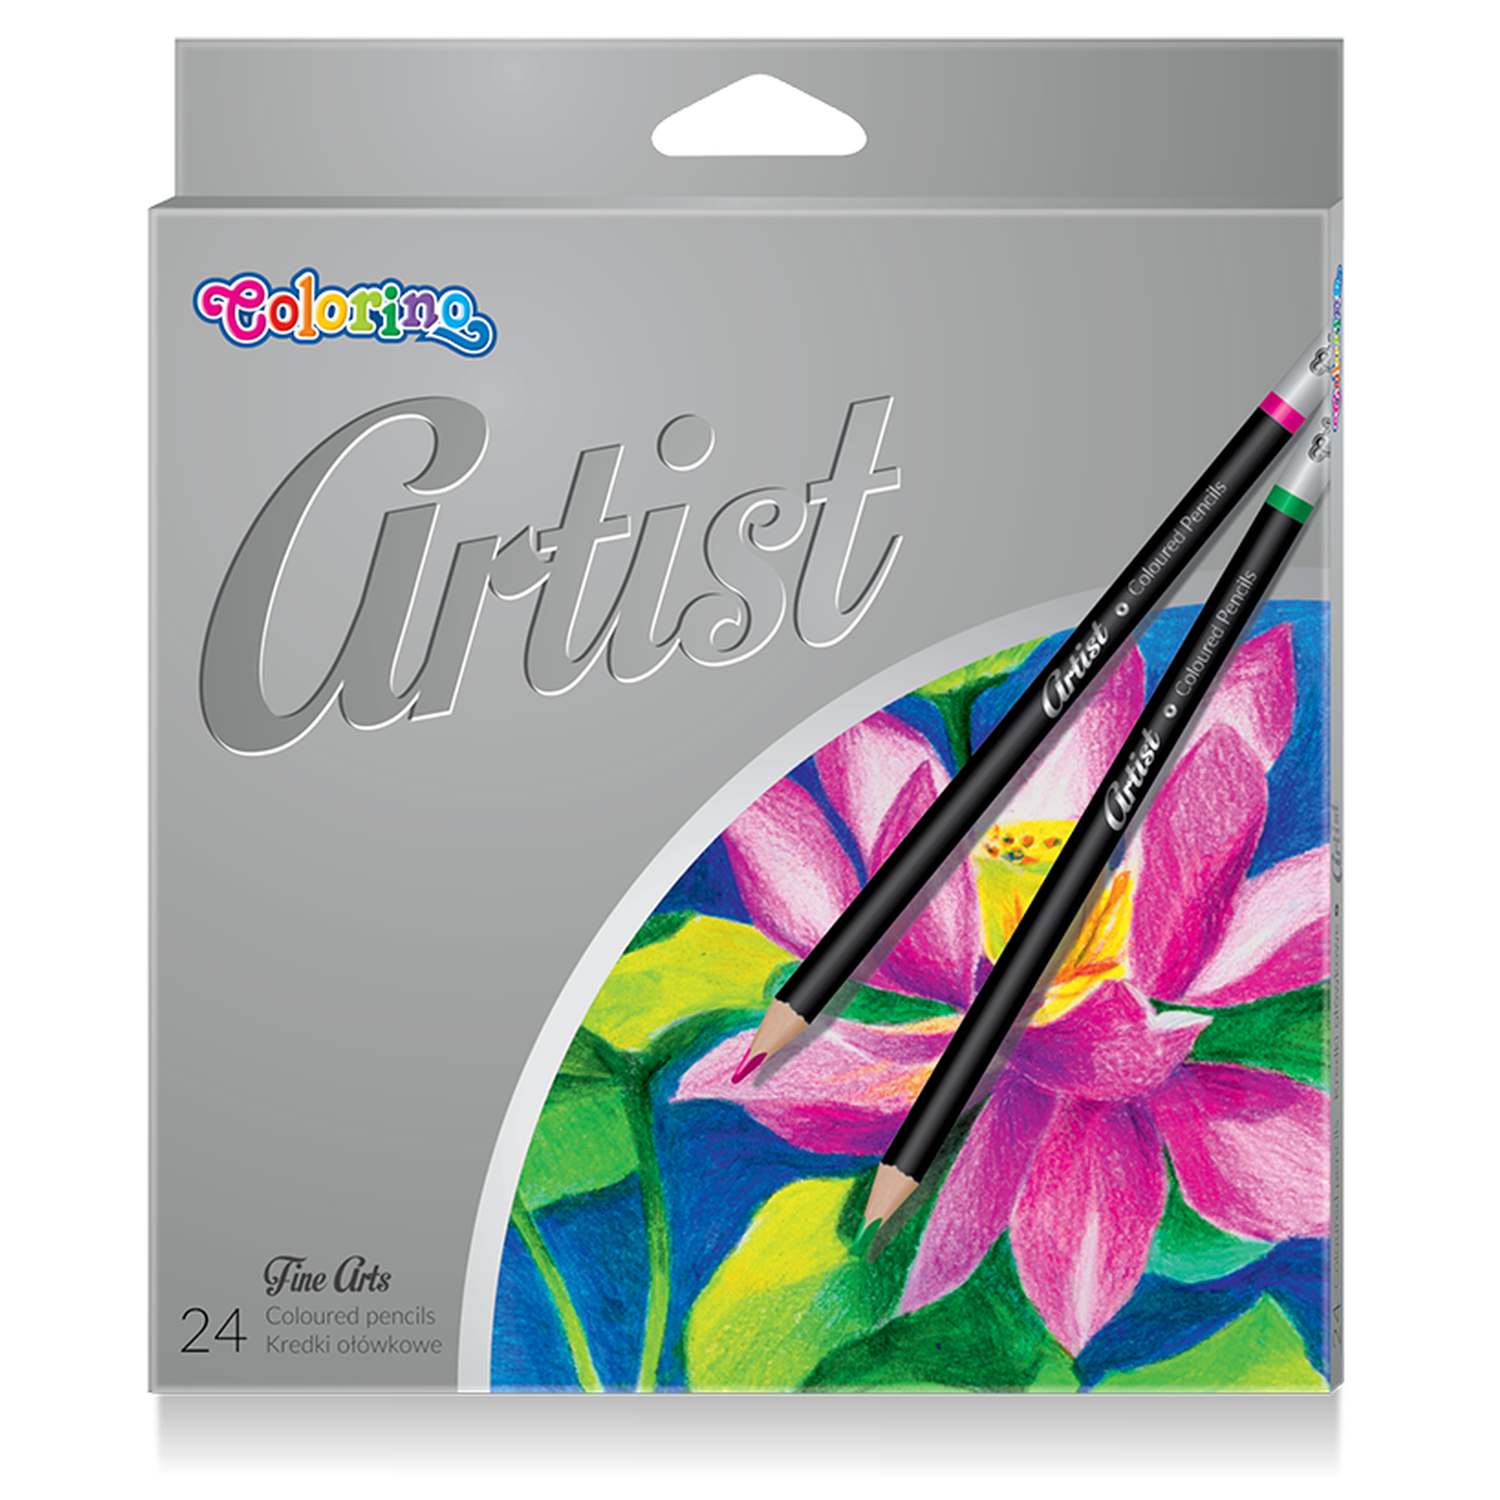 Цветные карандаши COLORINO Artist 24 цвета - фото 1